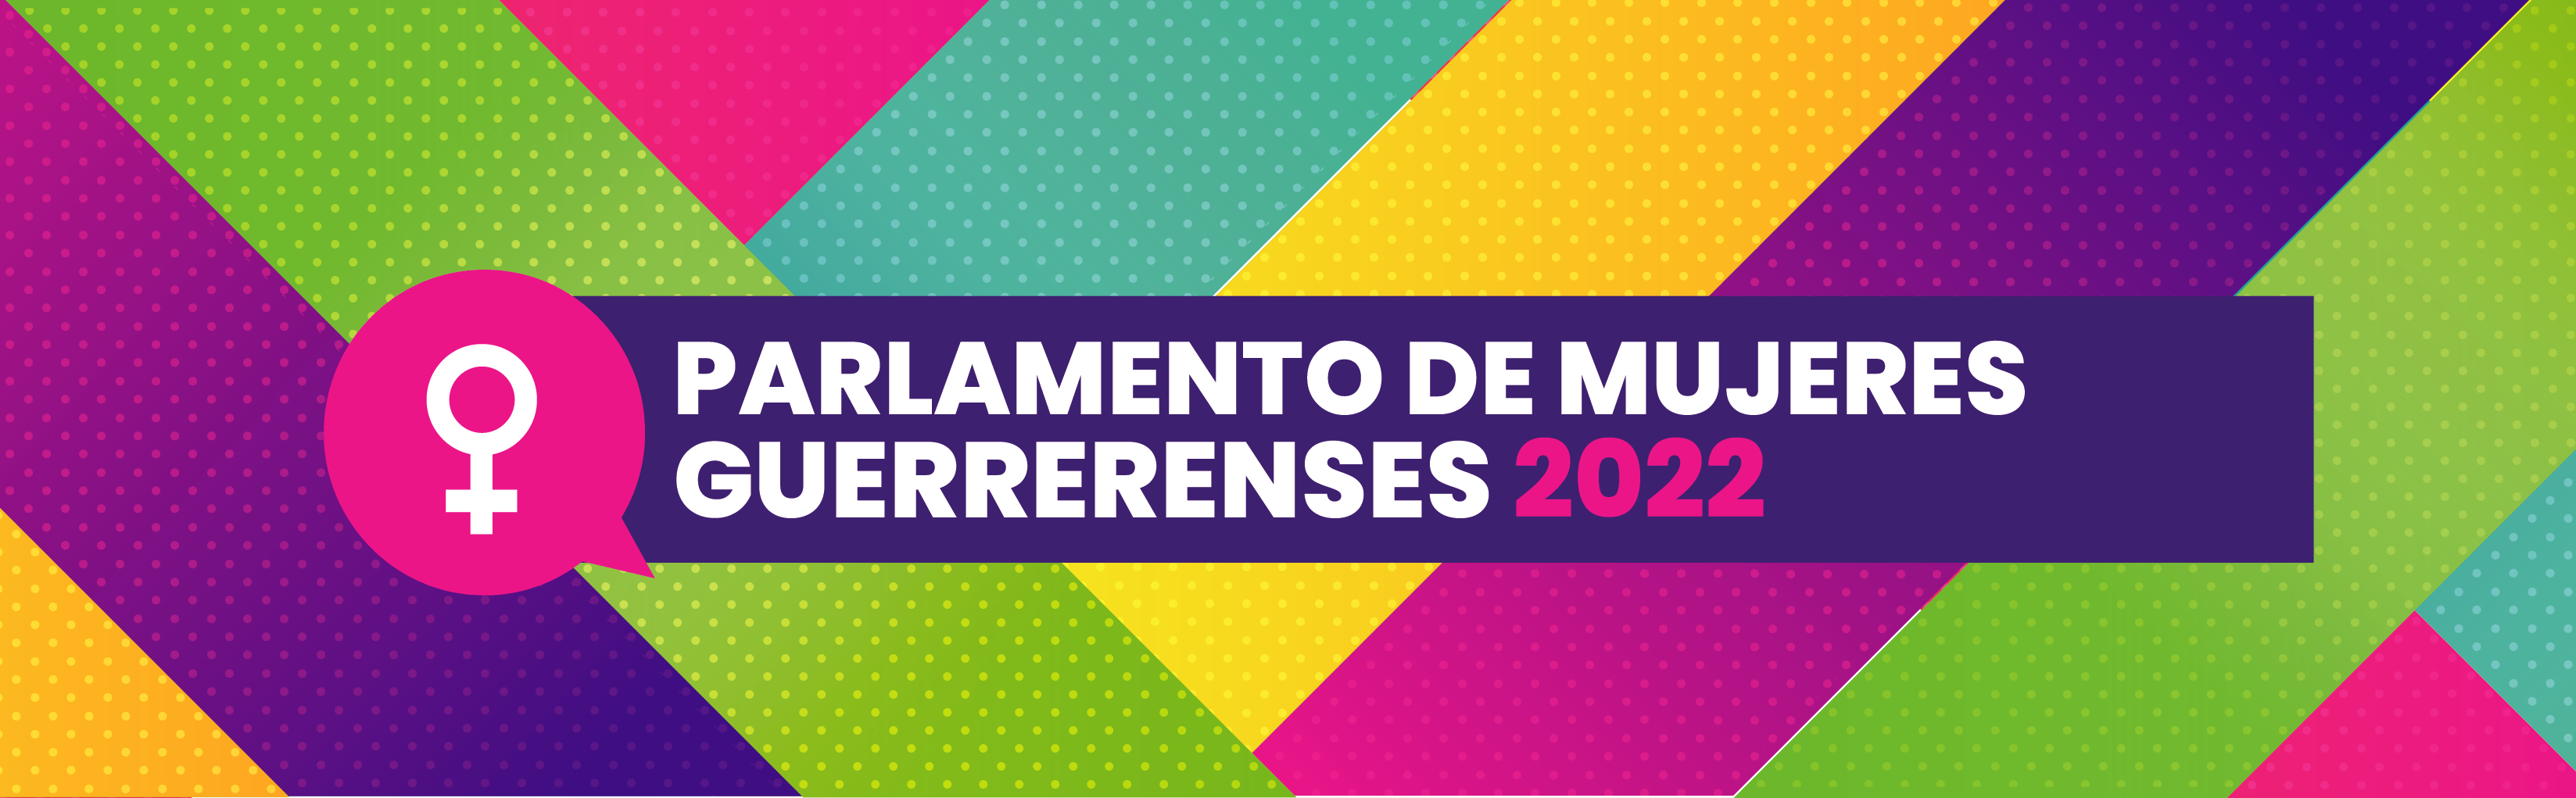 https://congresogro.gob.mx/63/inicio/wp-content/uploads/2022/02/Parlamento_mujer-01.png